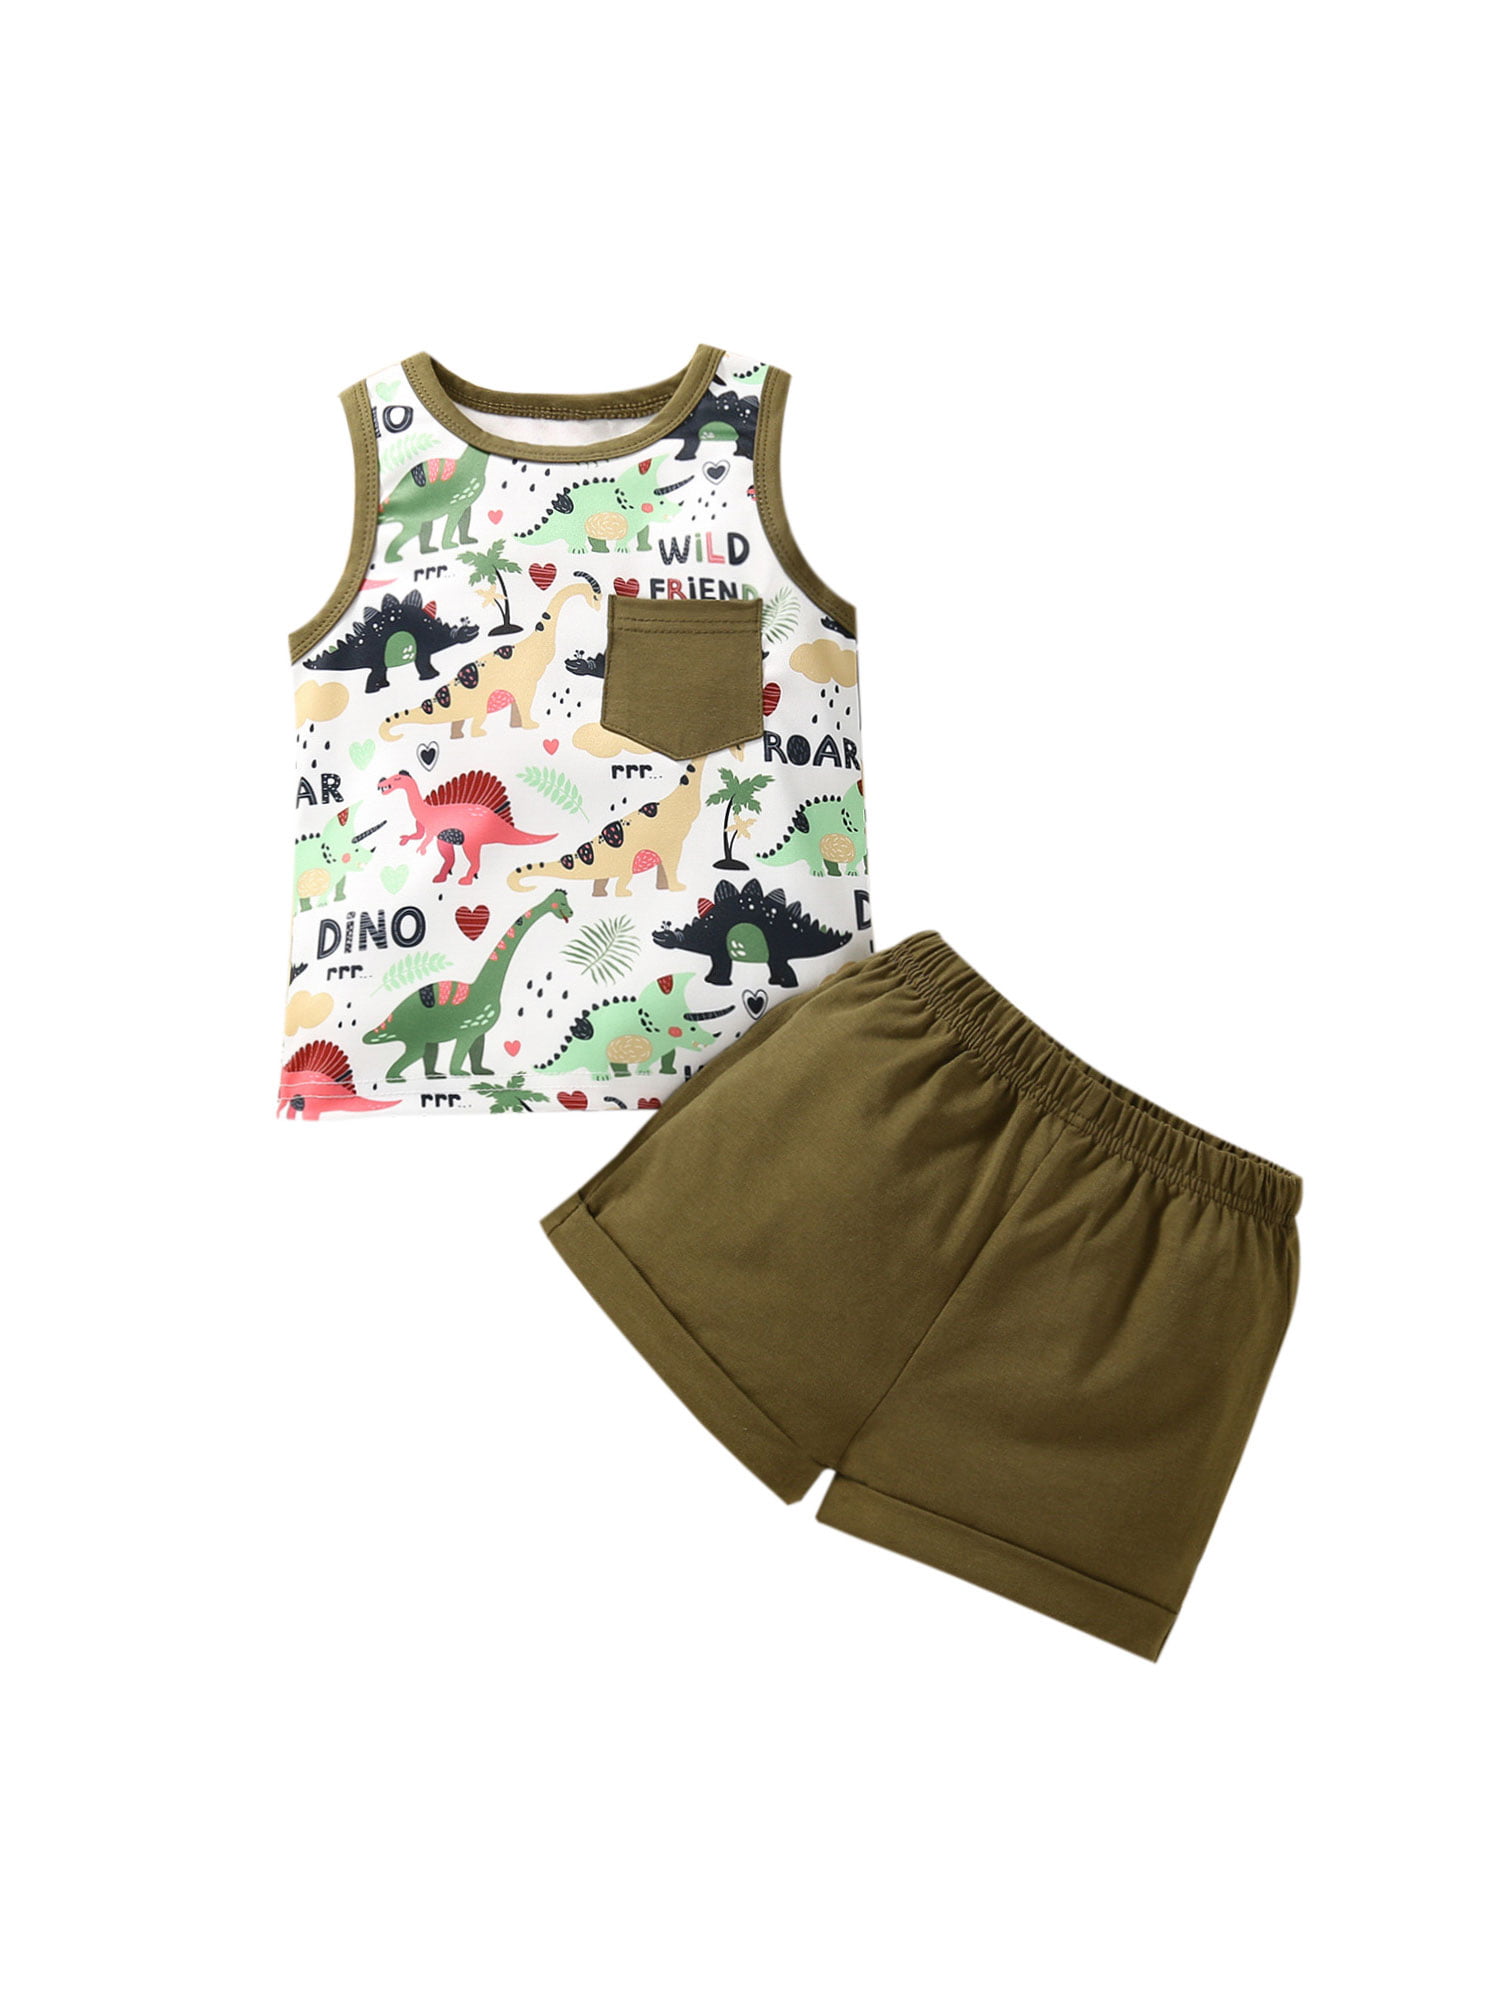 citgeett Toddler Infant Baby Boy Vest Shorts Set Dinosaur Tank Tops+Pants Outfits Summer Clothes